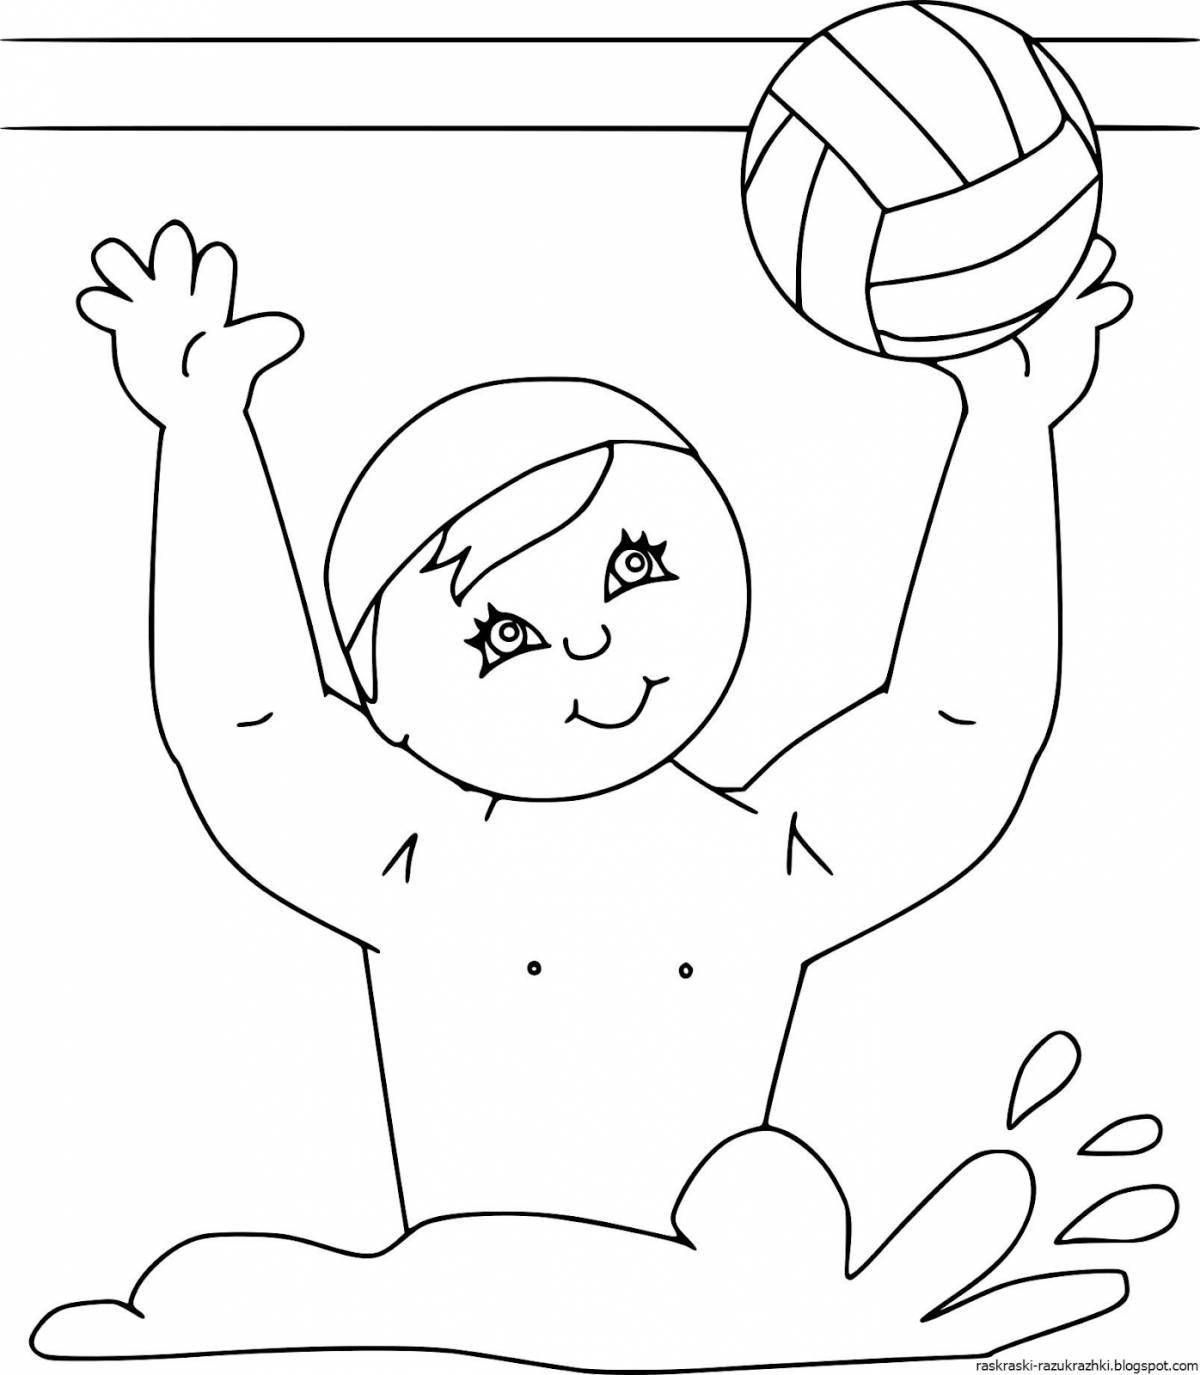 Fun sport coloring page для детей 4-5 лет